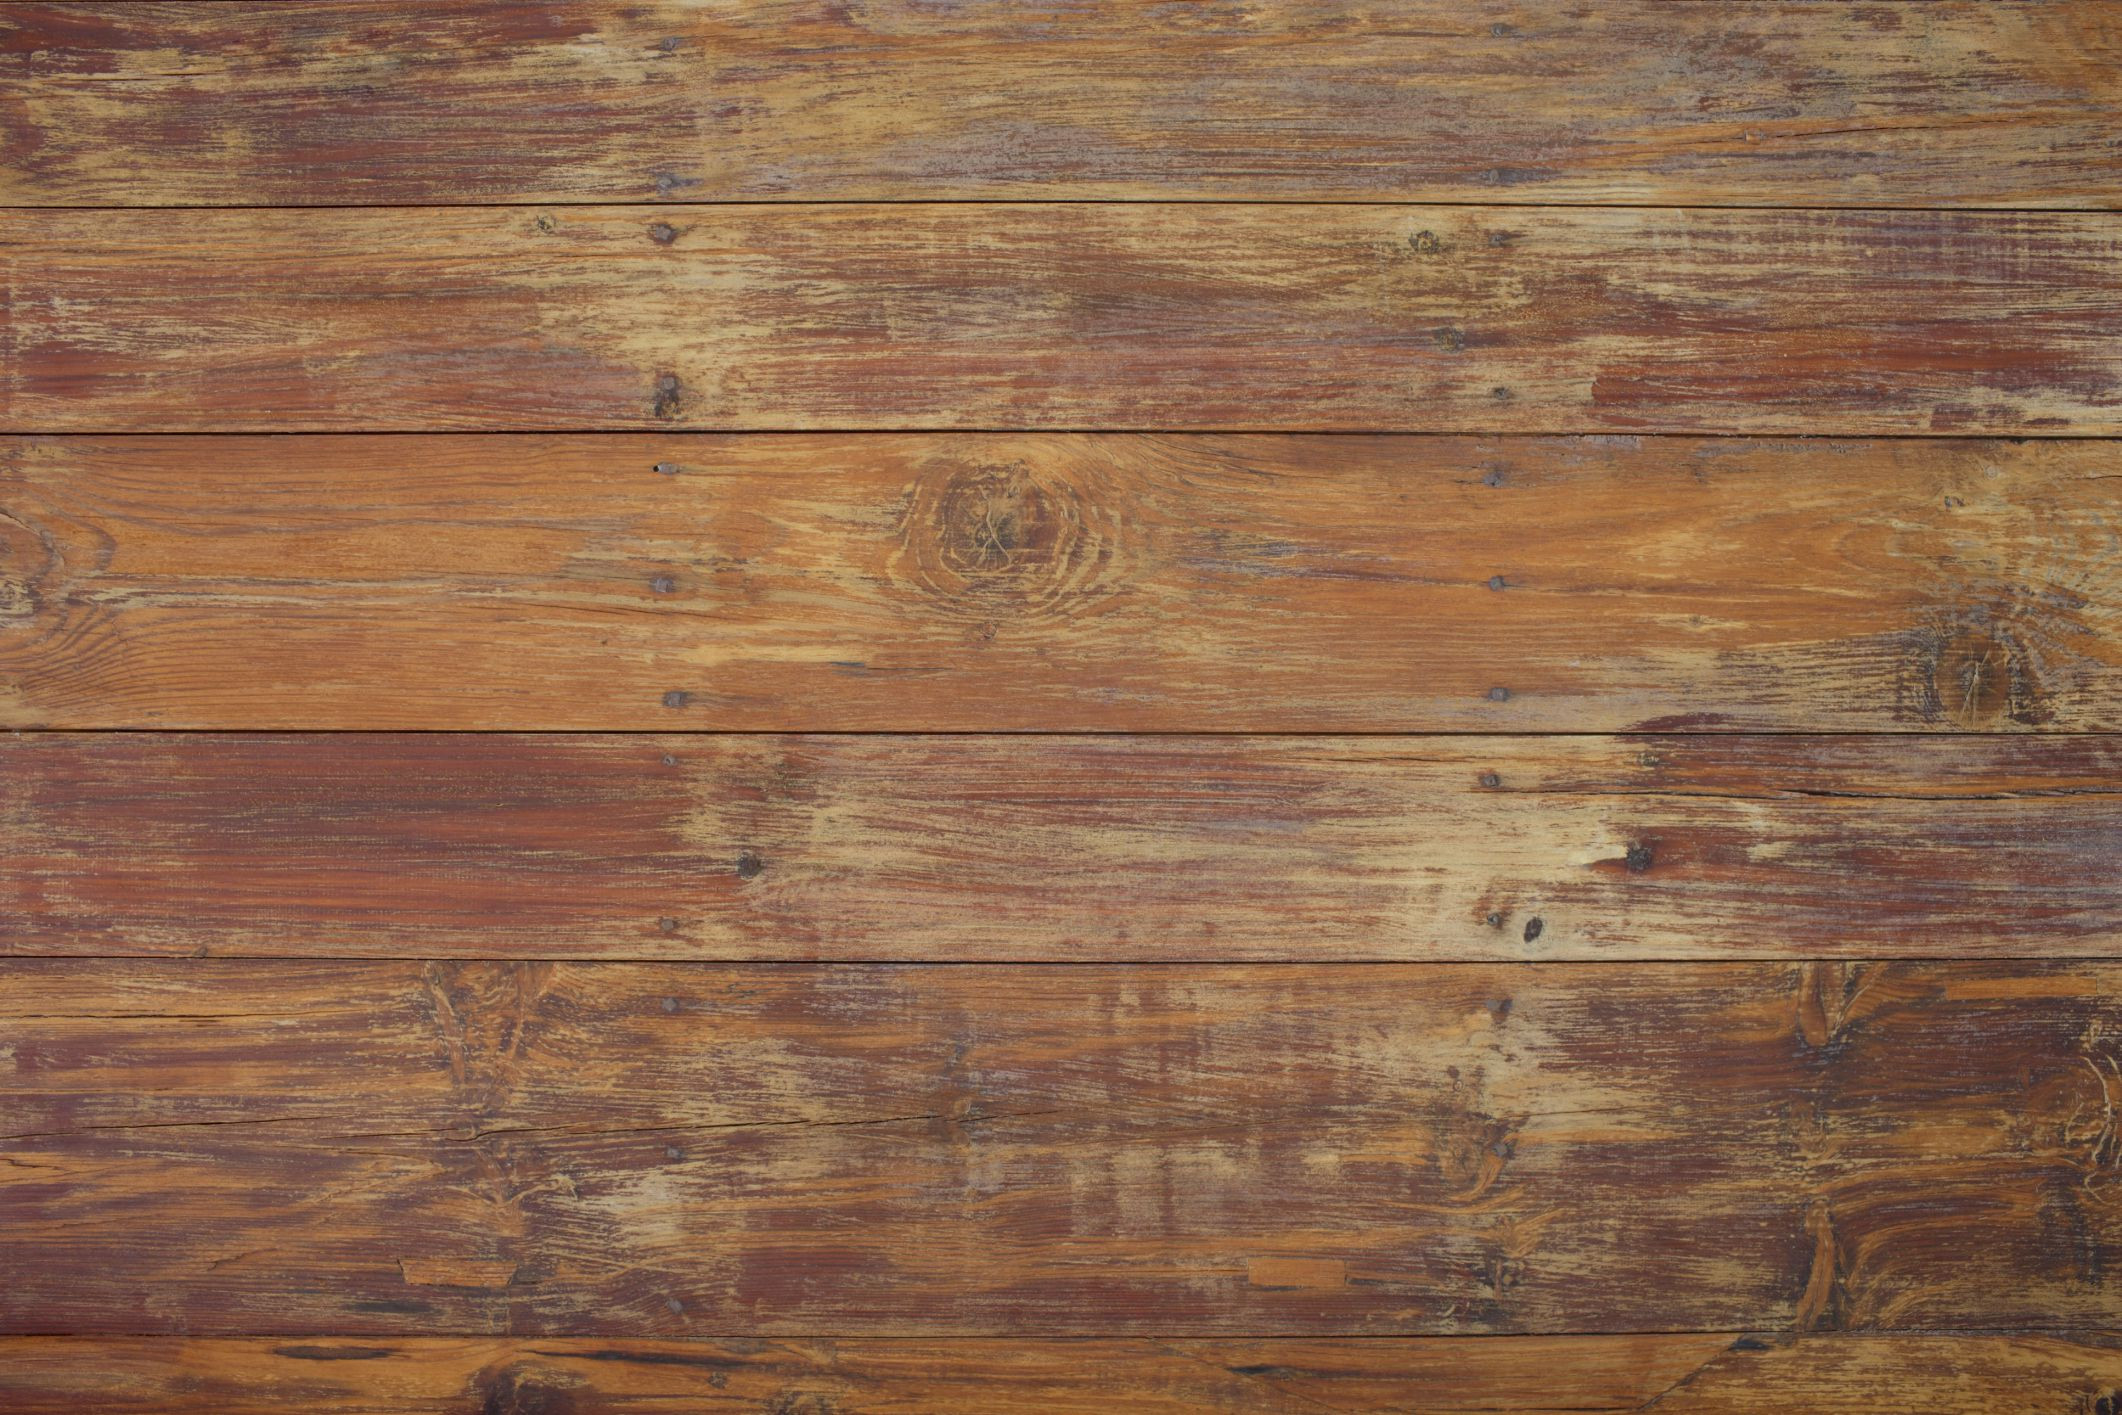 29 Lovely Hardwood Floor Repair Gaps In the Planks 2024 free download hardwood floor repair gaps in the planks of how to level a slanted sloping floor regarding oldslopingfloor 200378187 001 570d37d25f9b581408747176